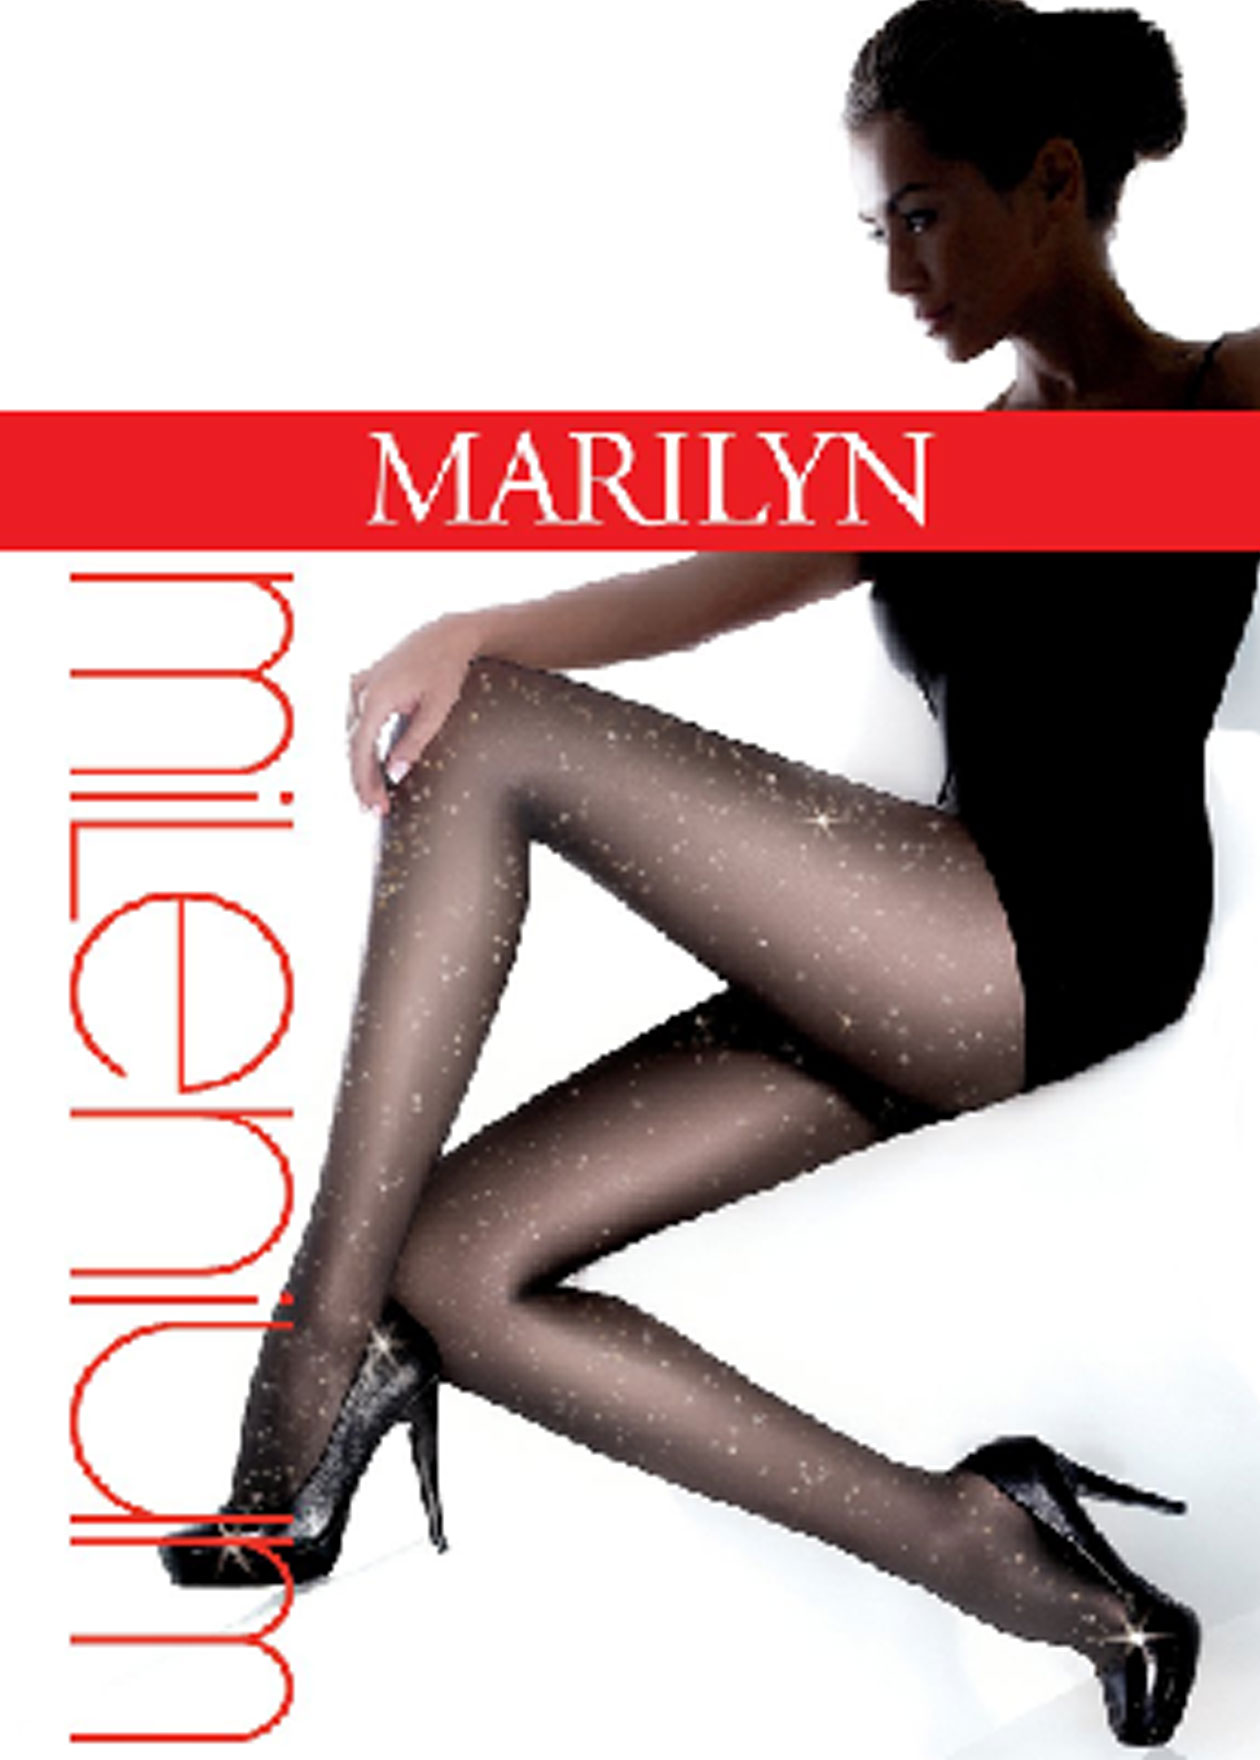 Marilyn Milenium 20